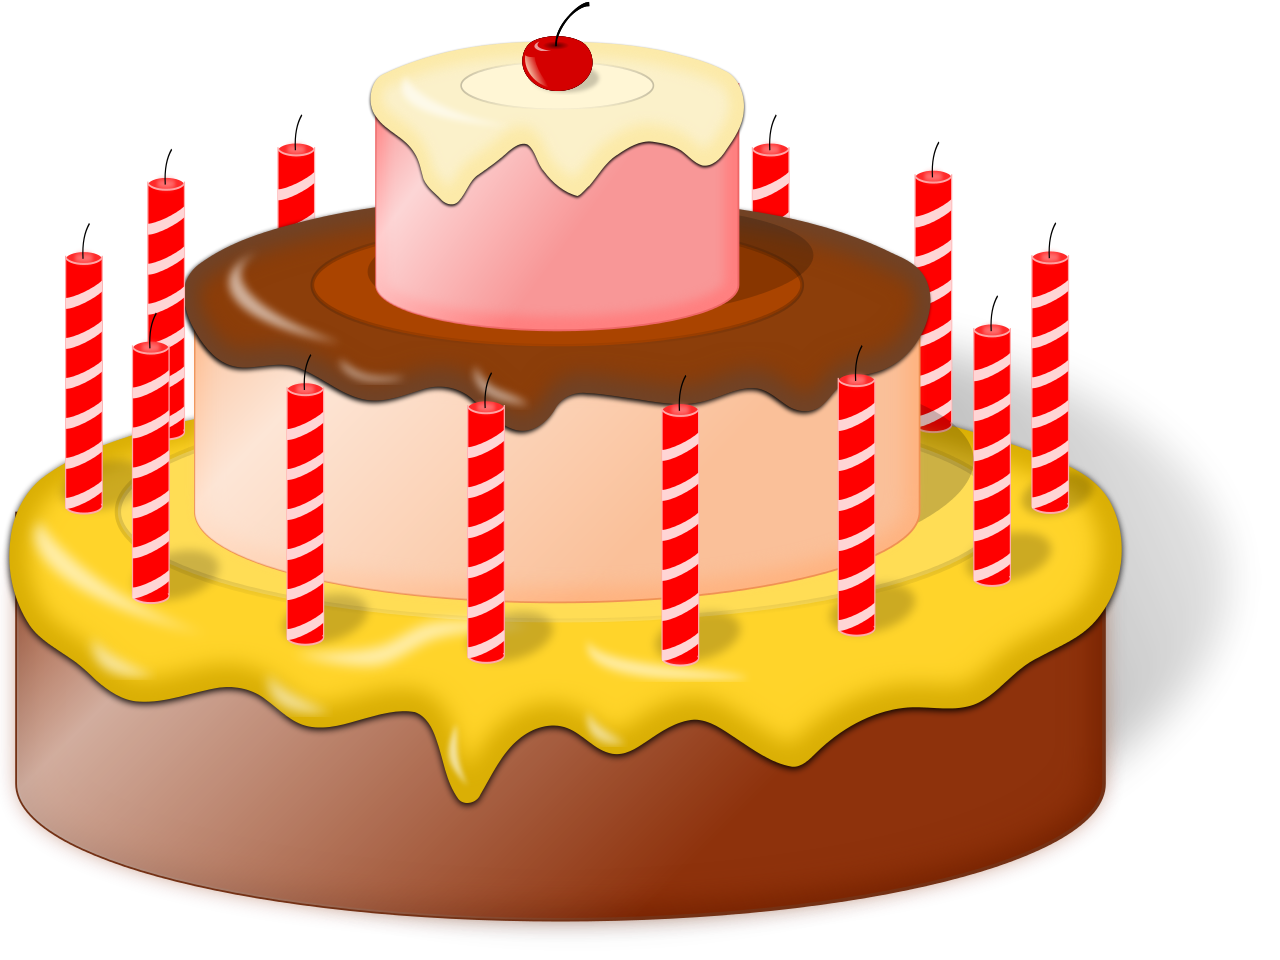 File:Birthday-cake-153106.svg - Wikimedia Commons